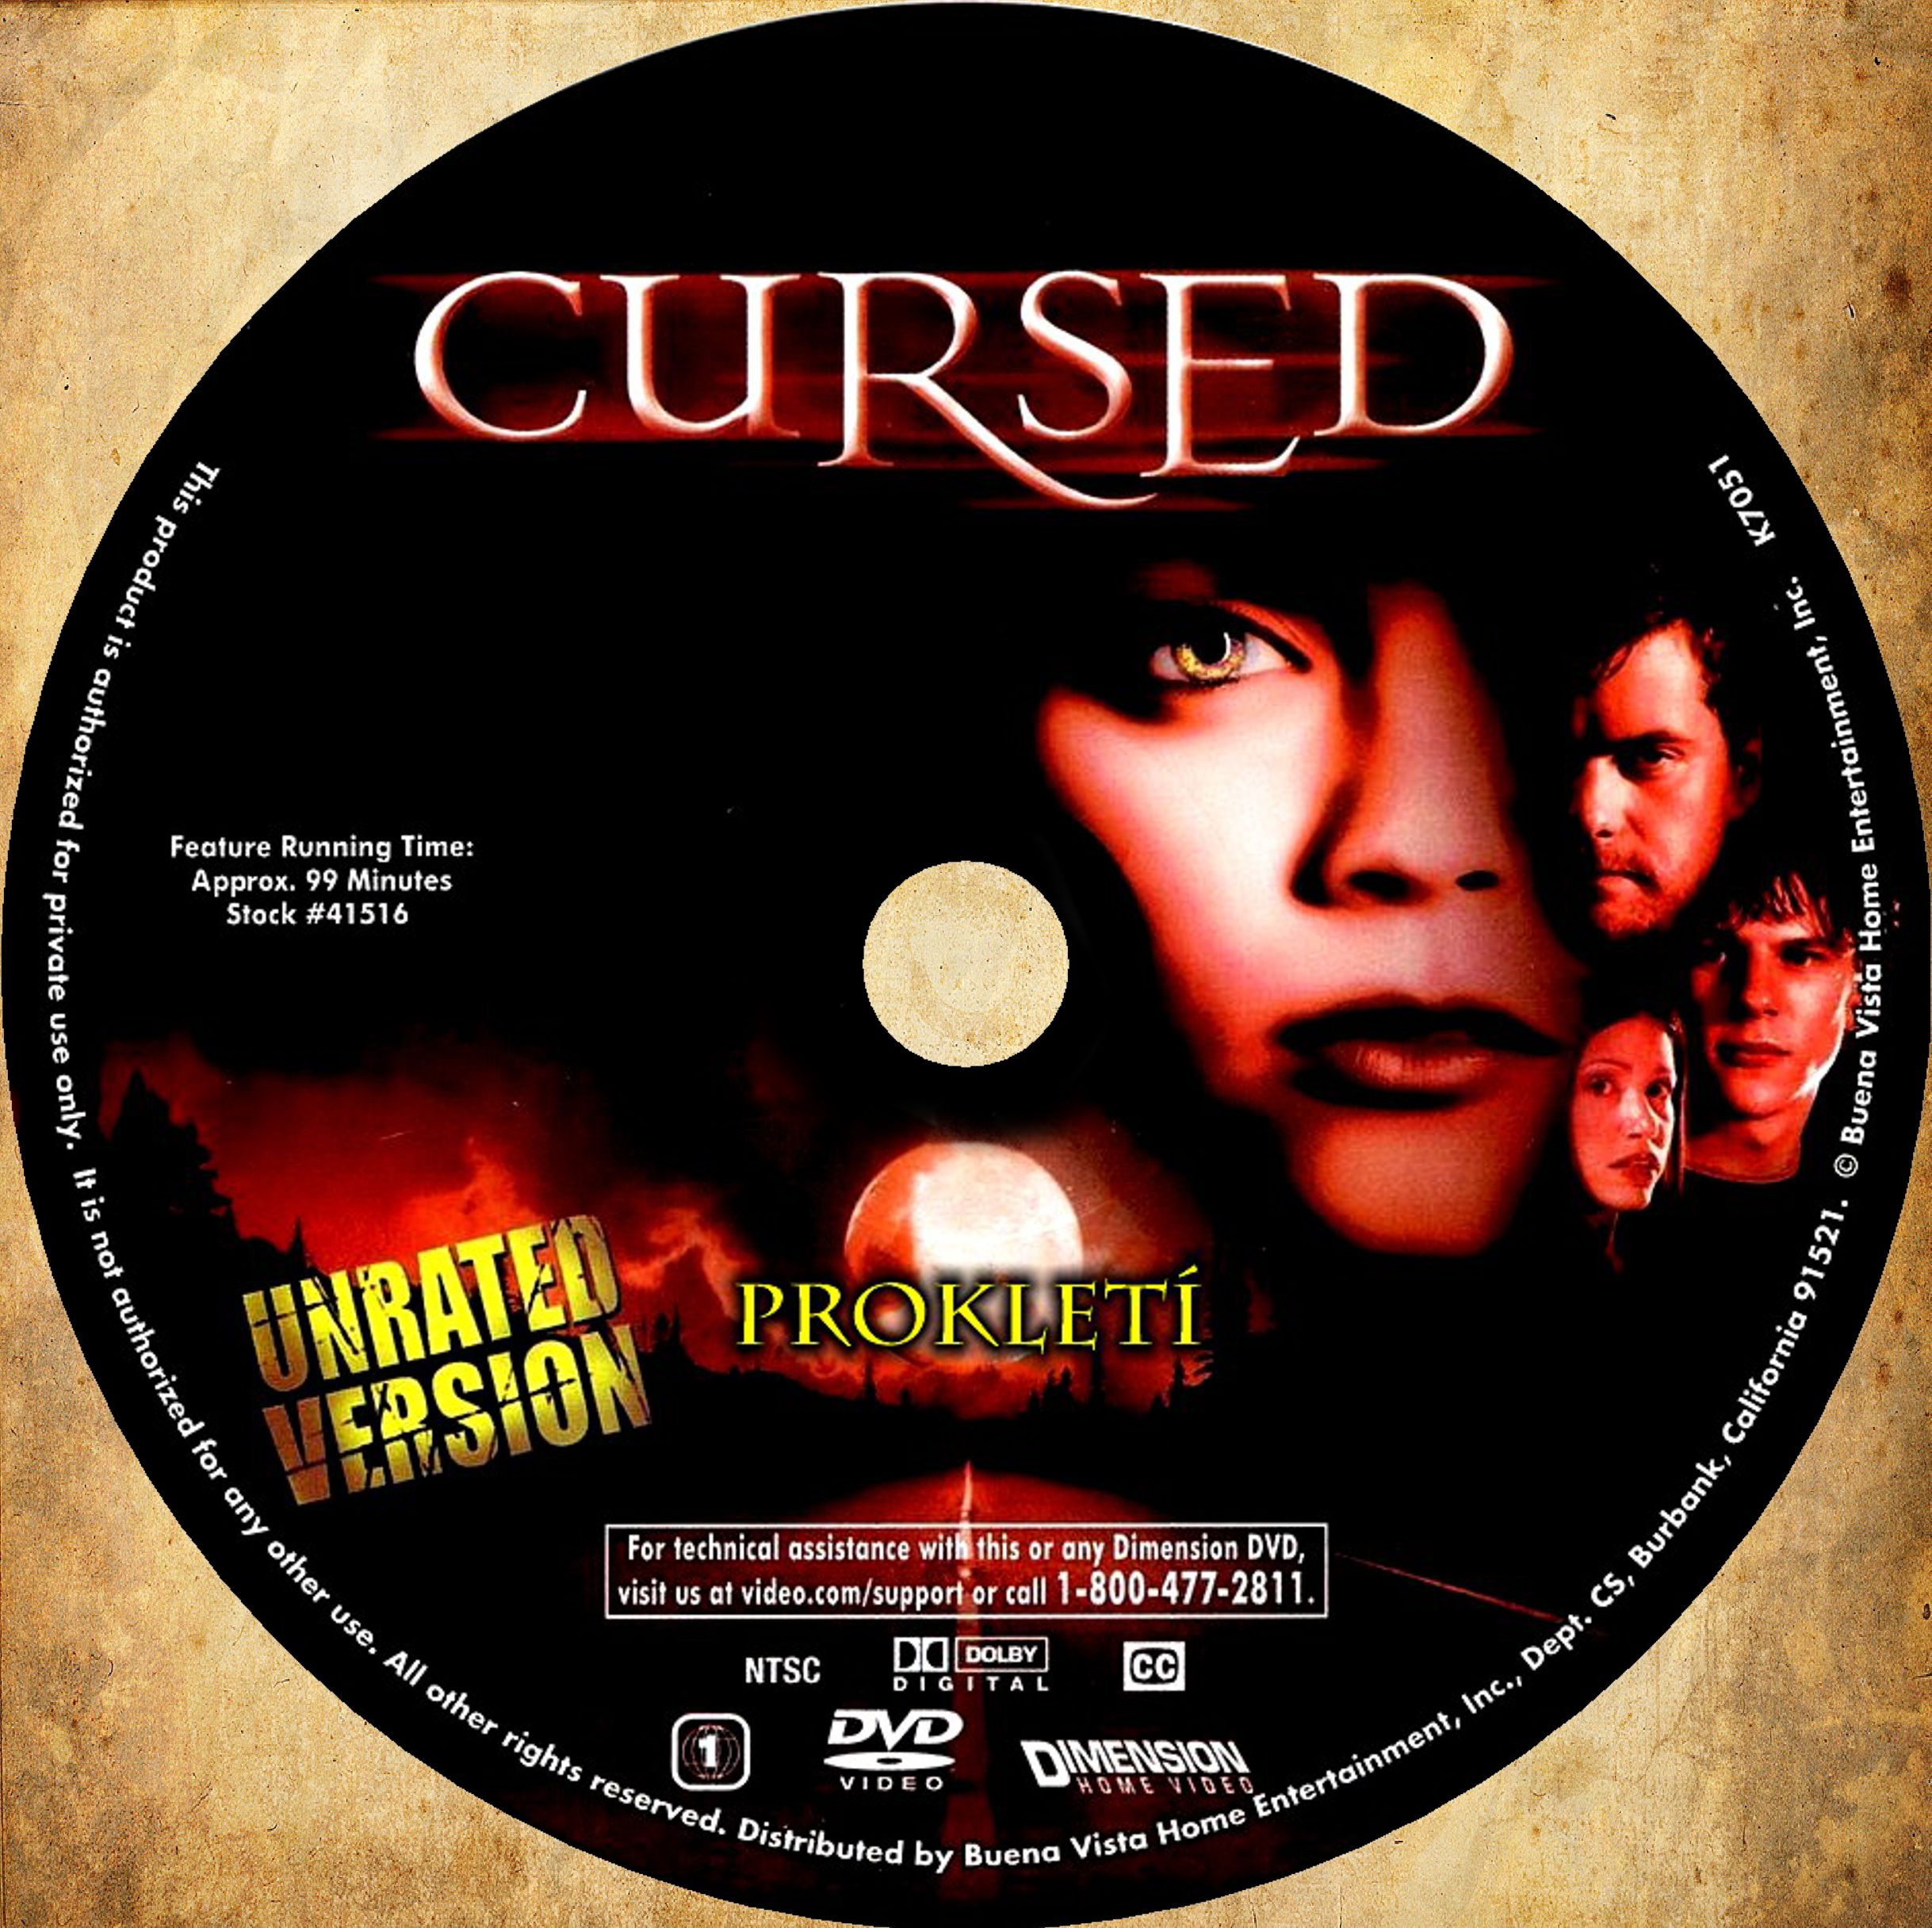 Cursed (DVD, 2005) for sale online